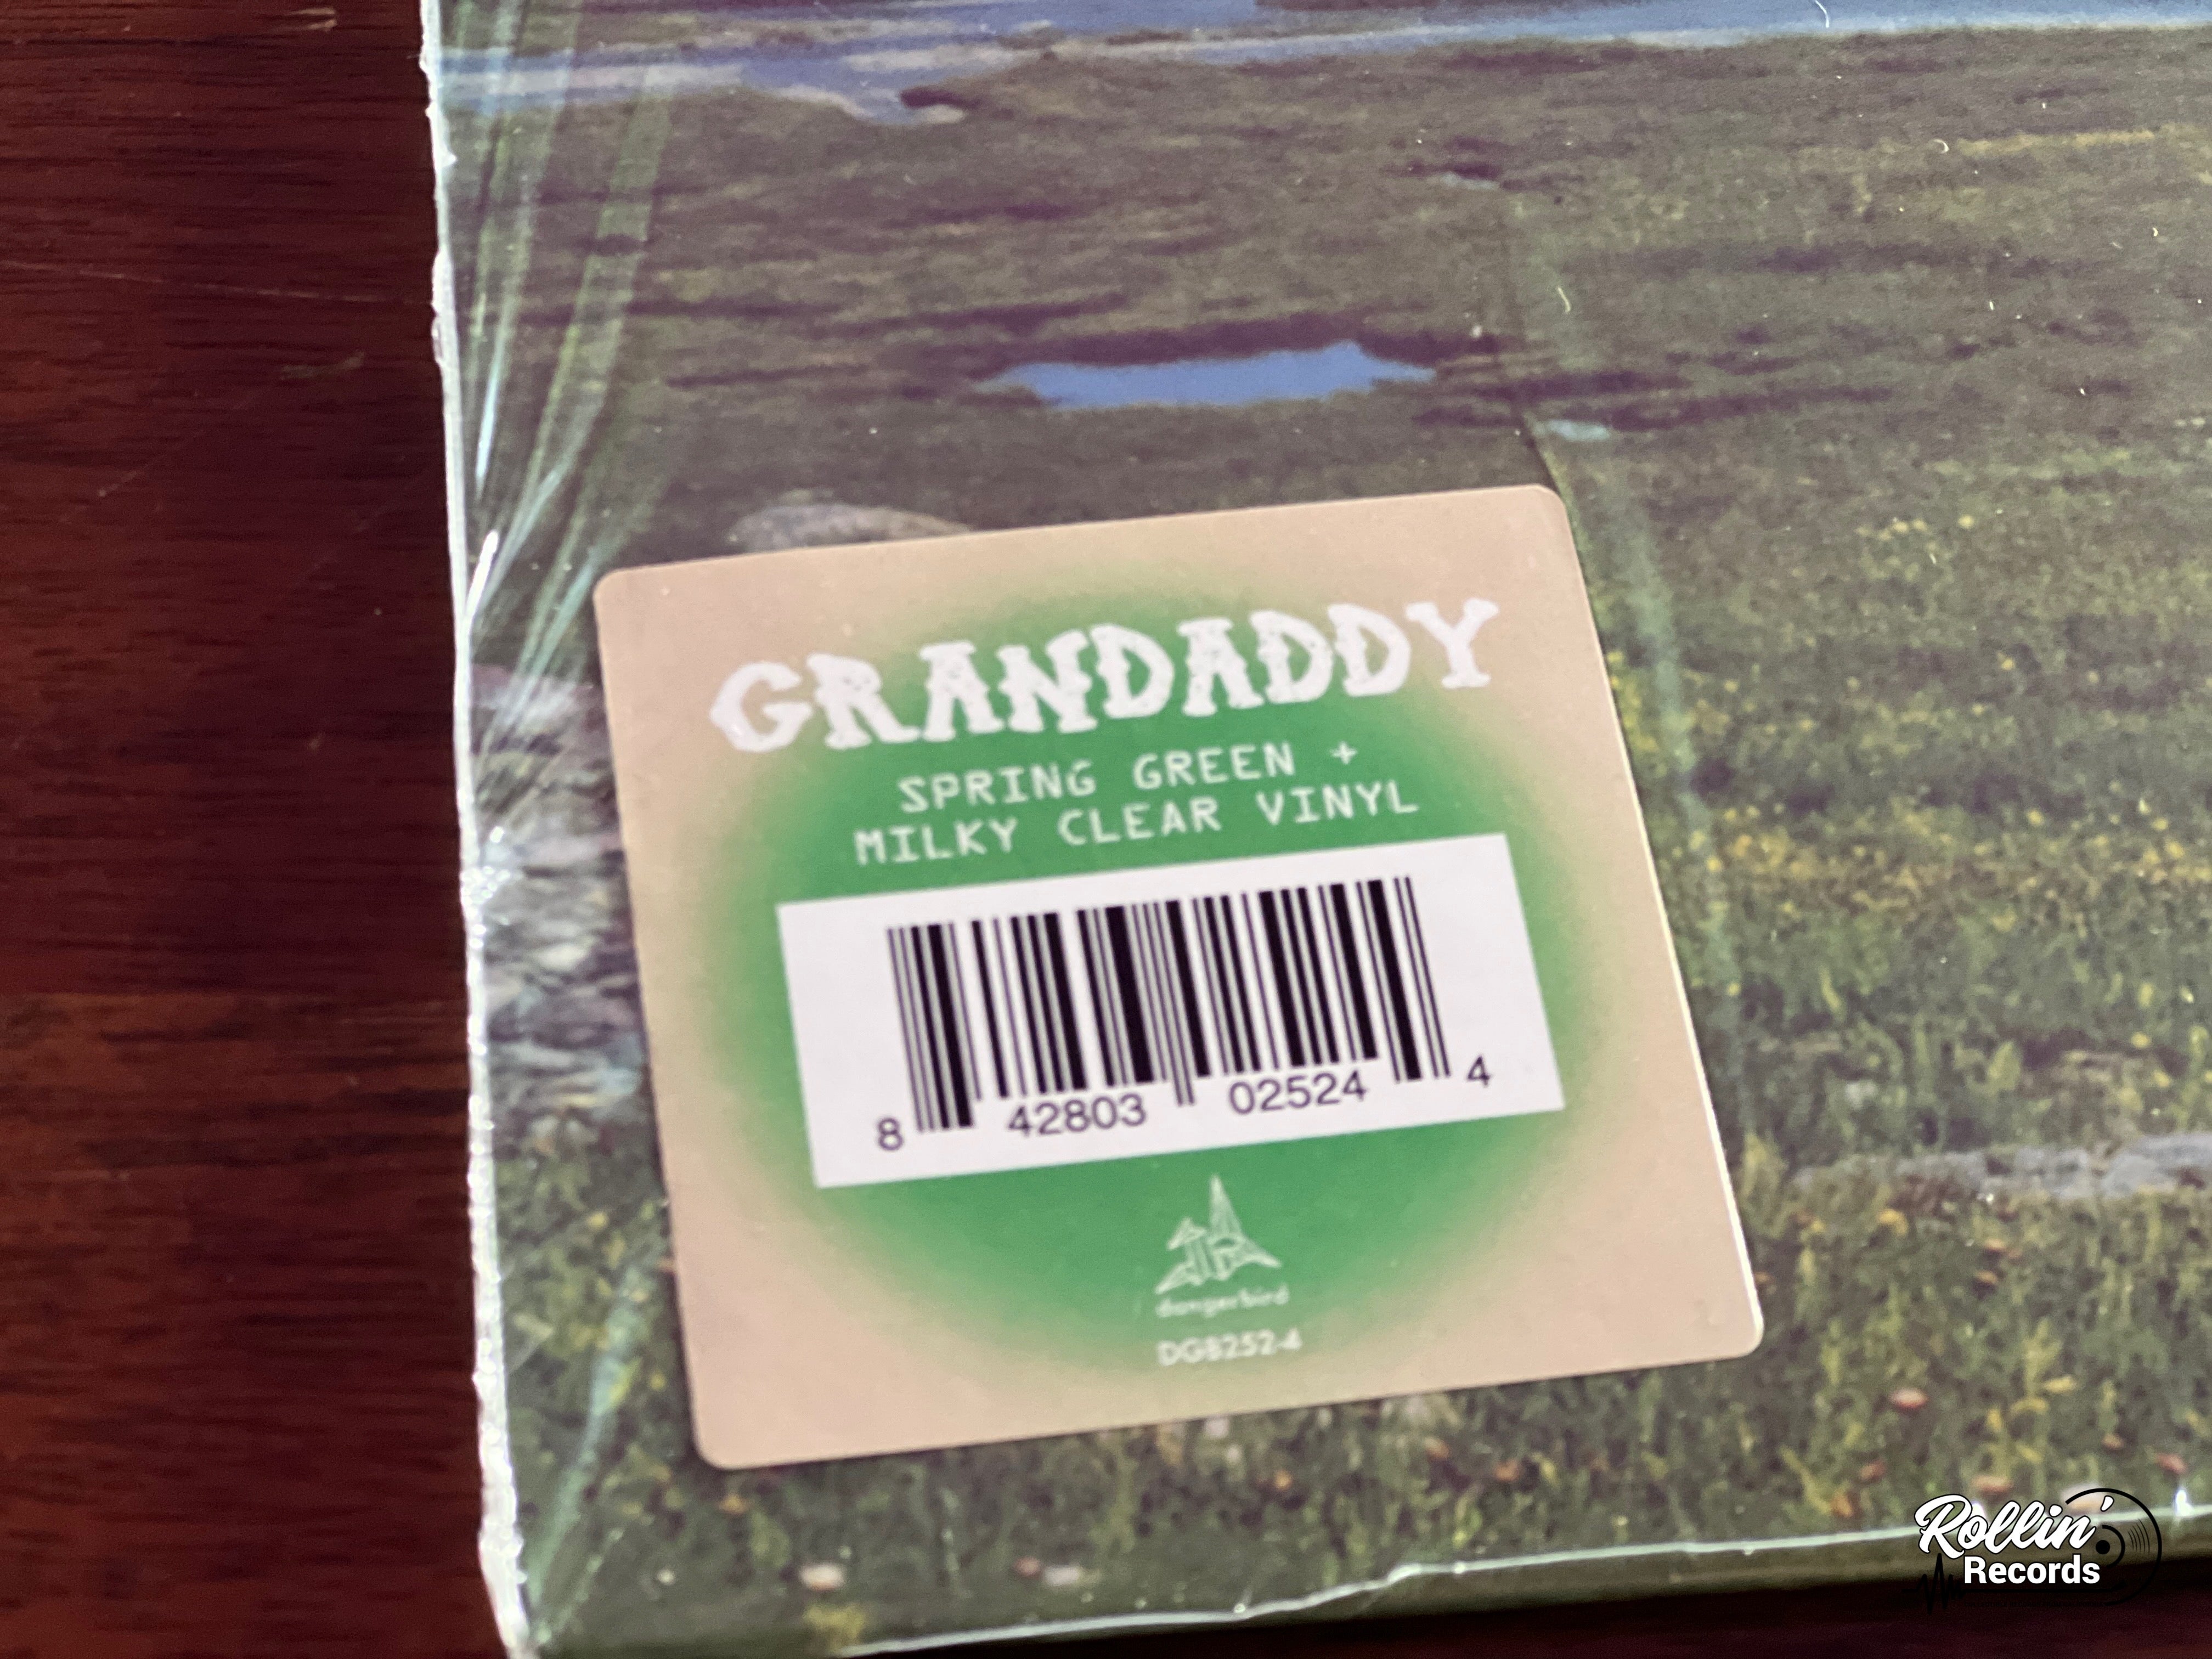 Grandaddy / The Sophtware Slump レコード LP-